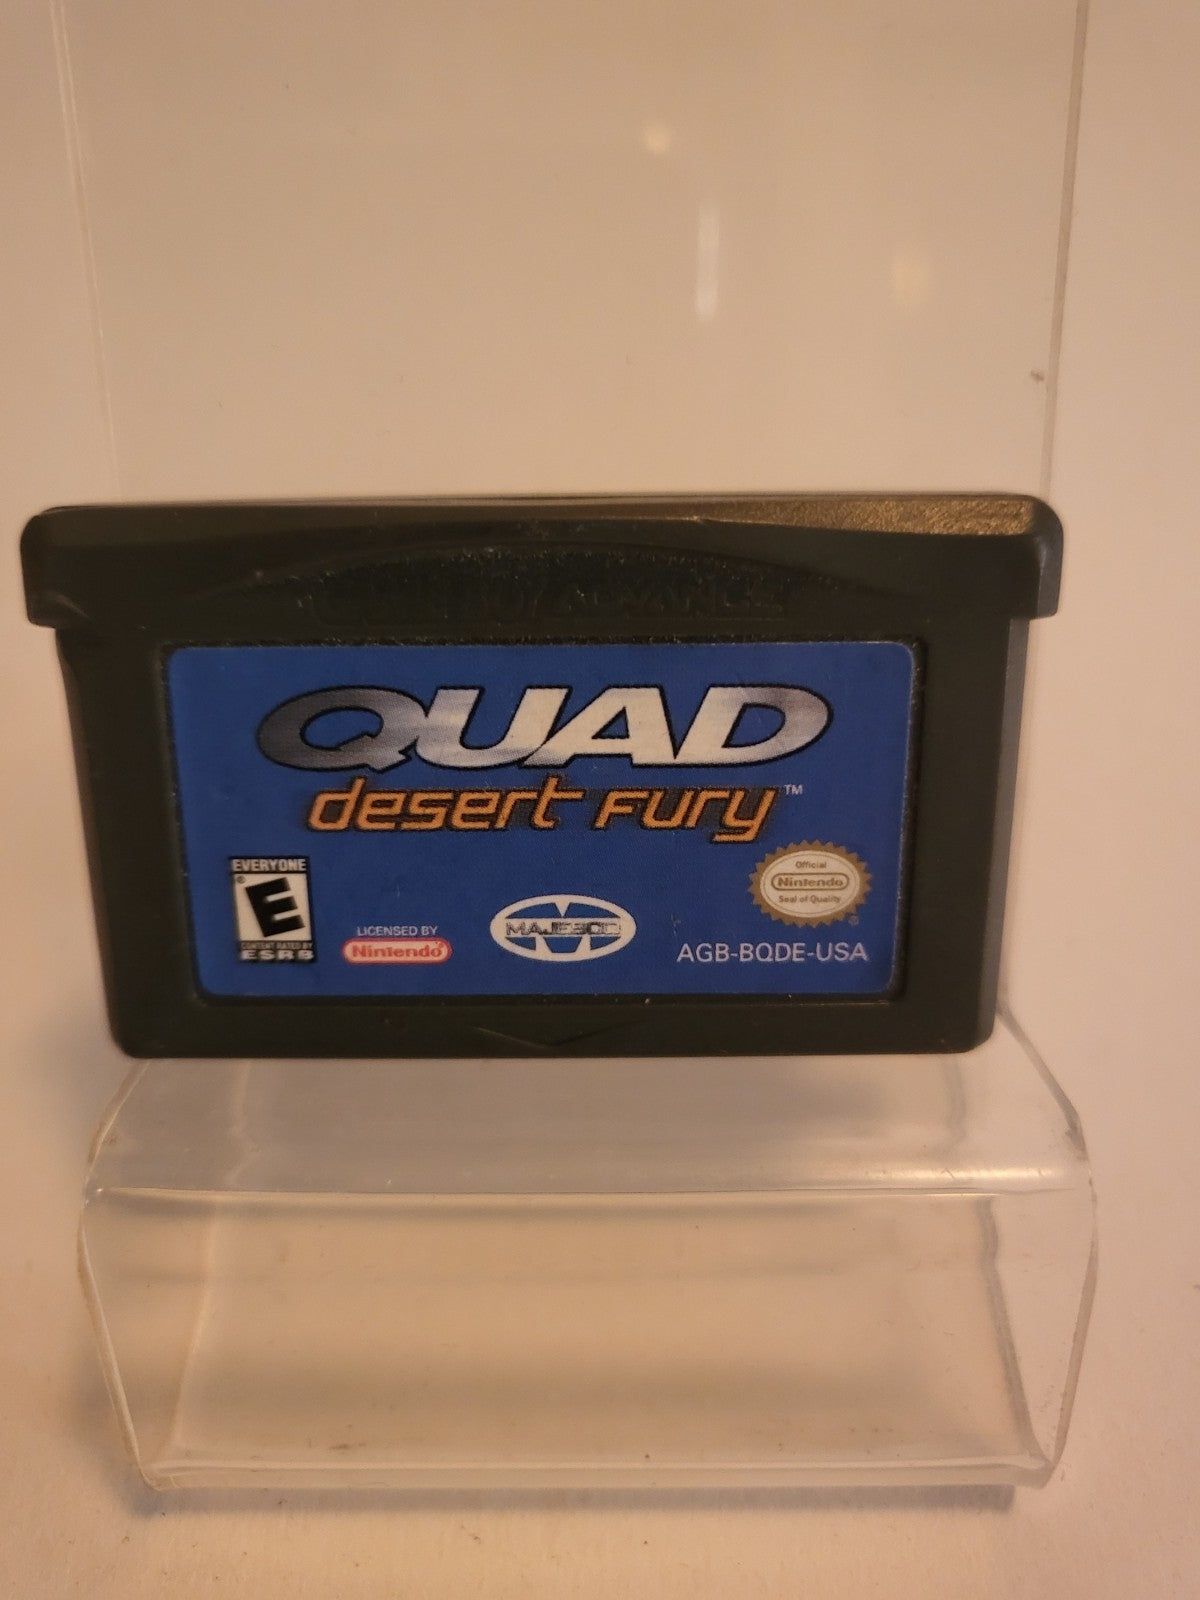 Quad Desert Fury Game Boy Advance